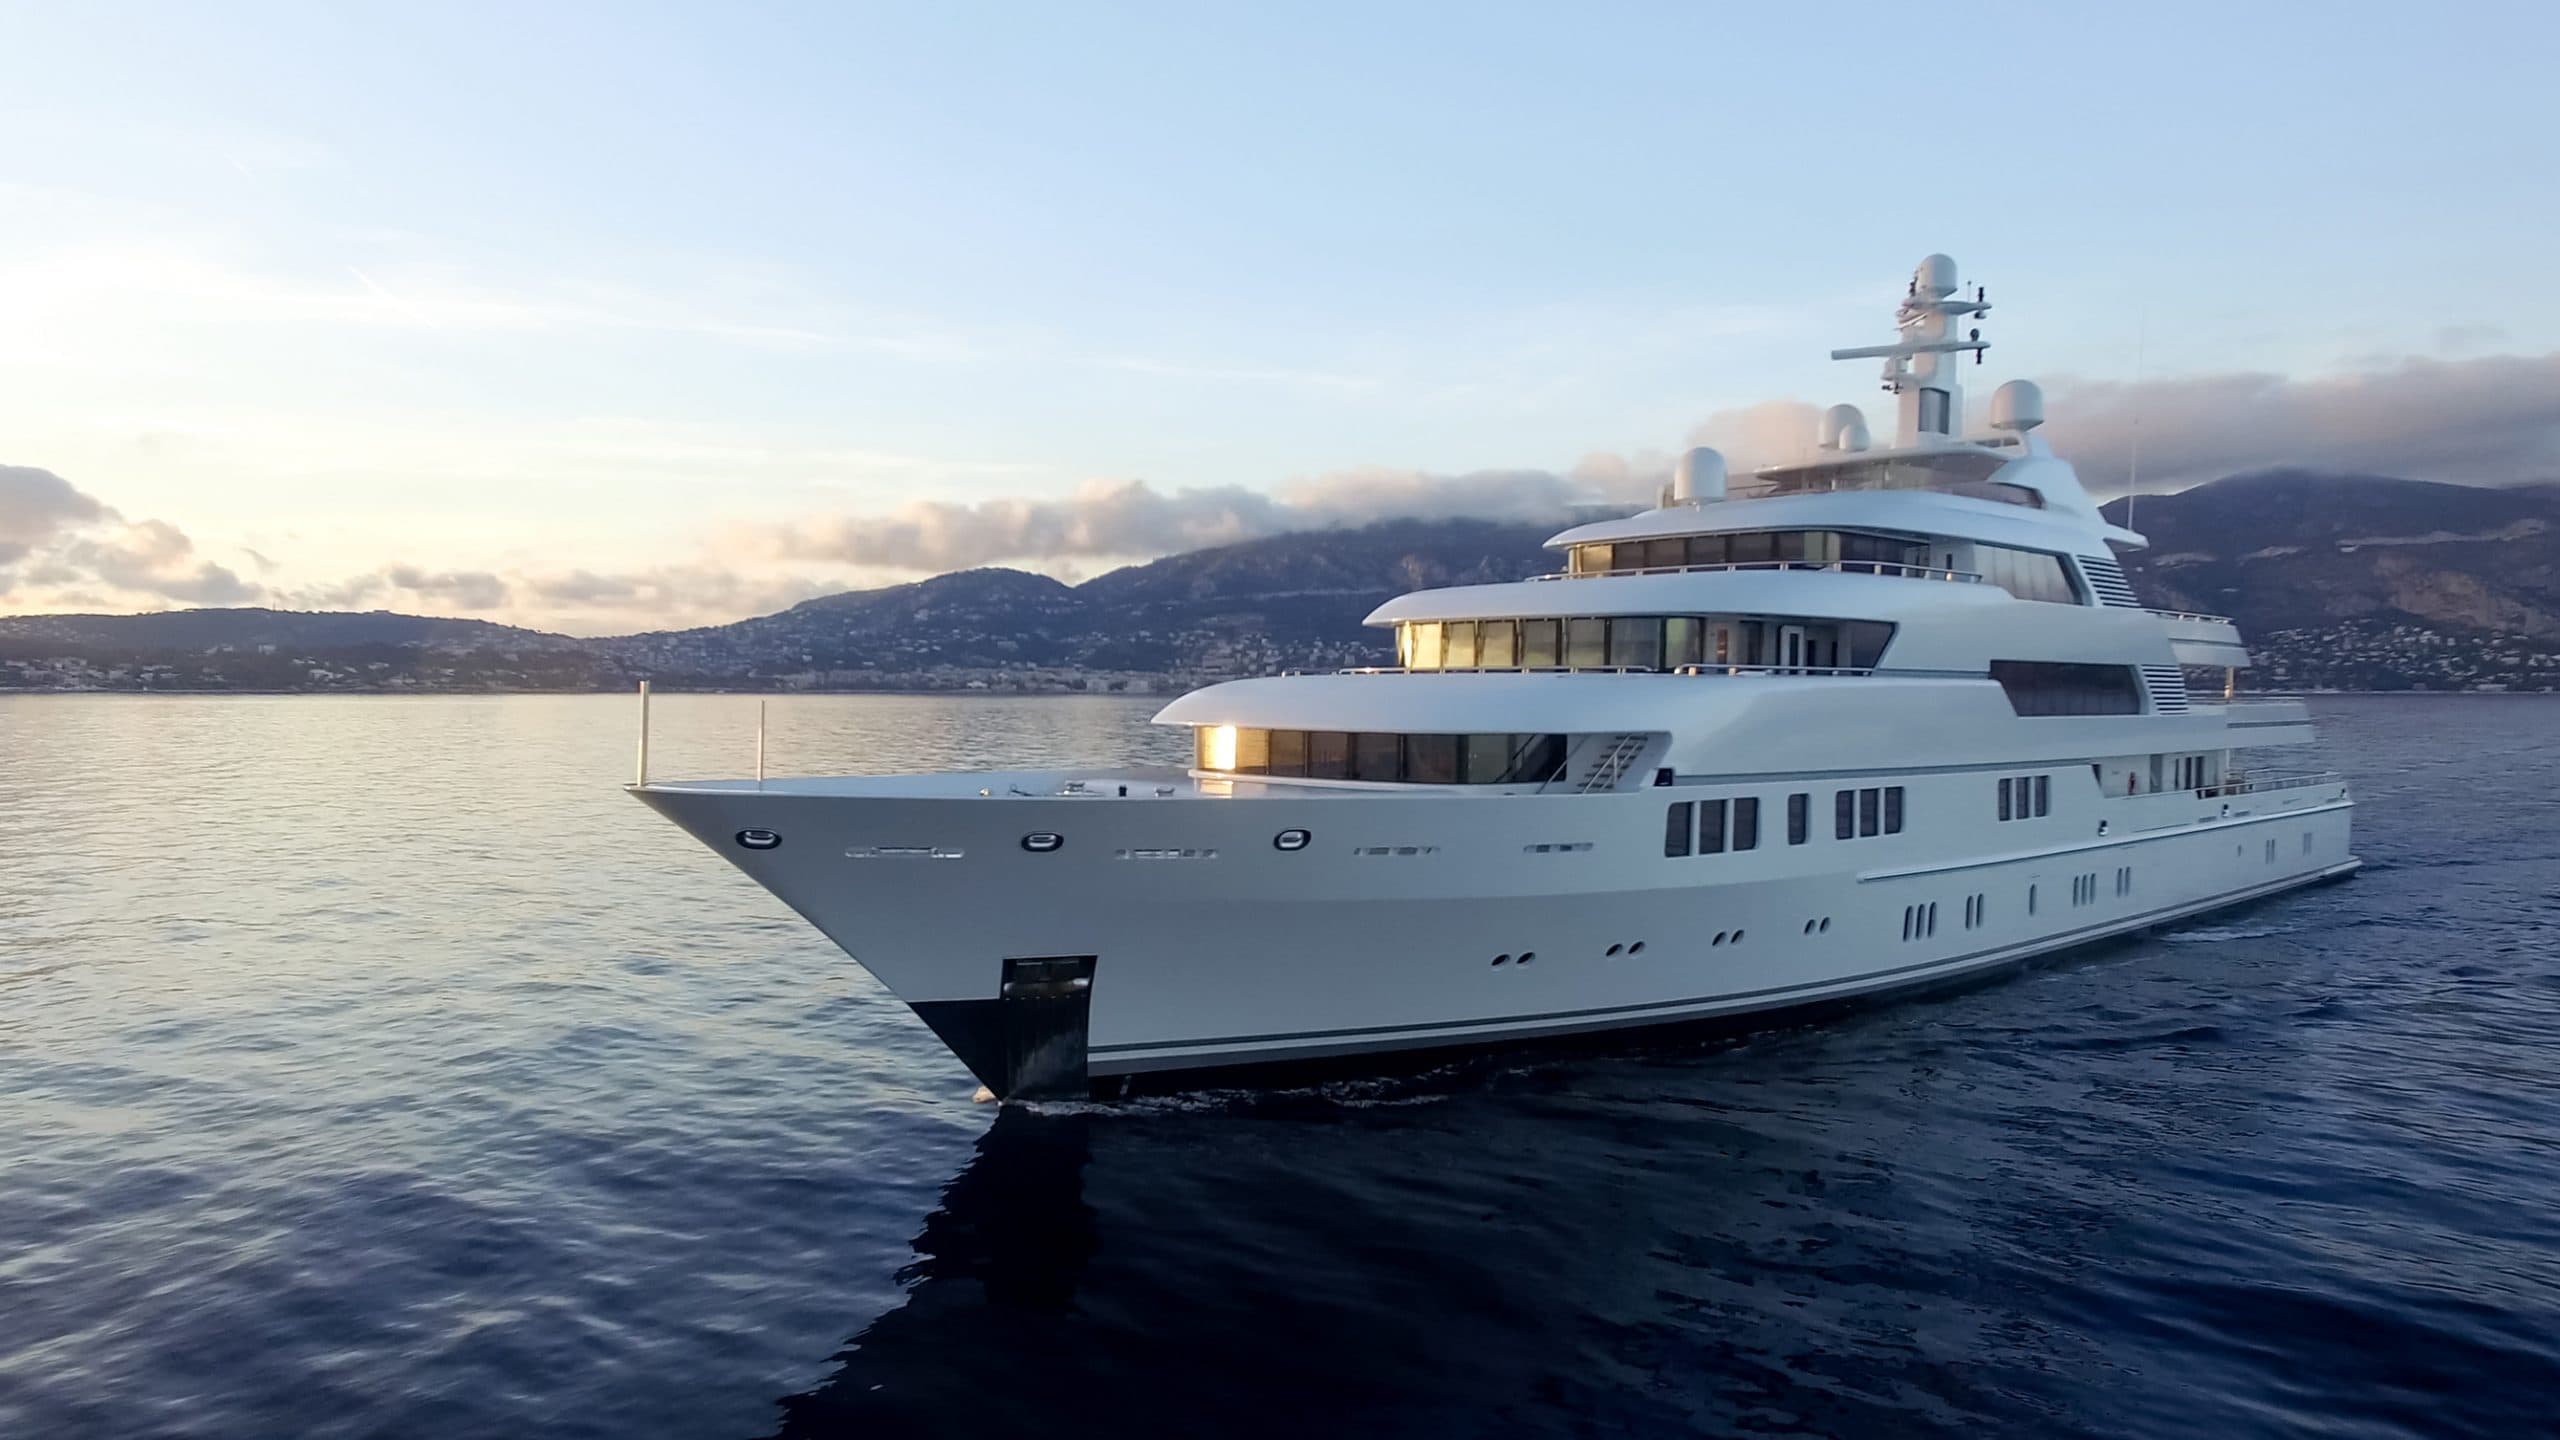 Gamer Pays $ 650,000 for Luxury Yacht in Sandbox Metaverse